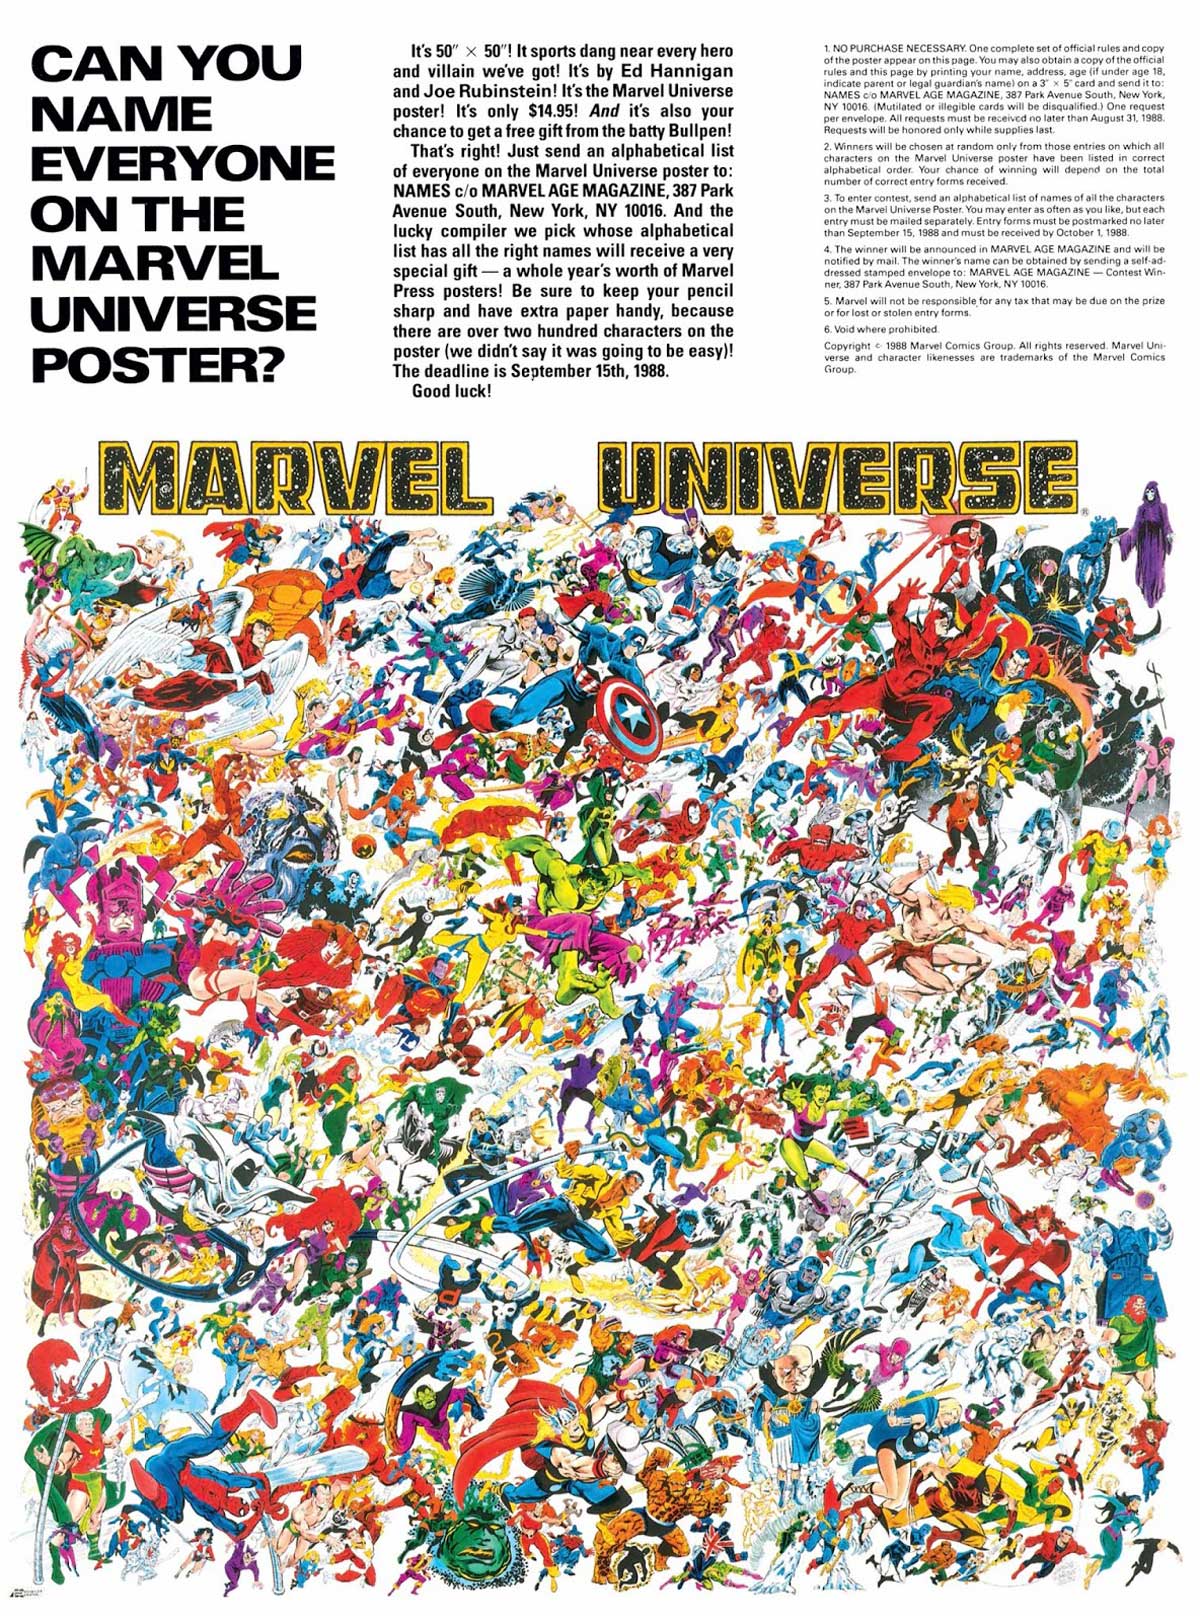 Marvel Universe Poster by Ed Hannigan & Josef Rubinstein